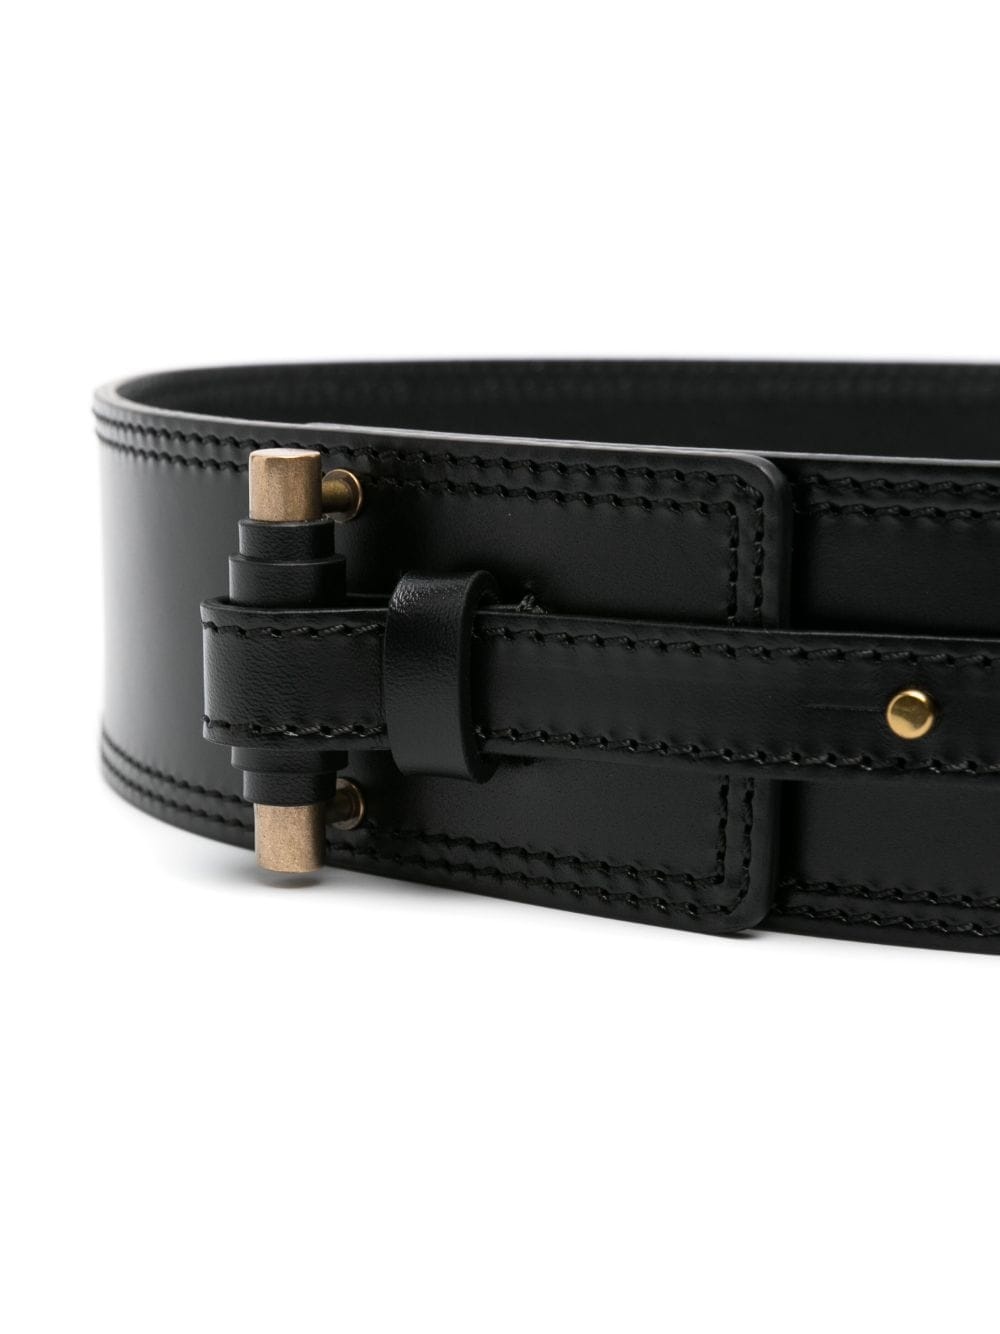 Vigo buckled leather belt - 2